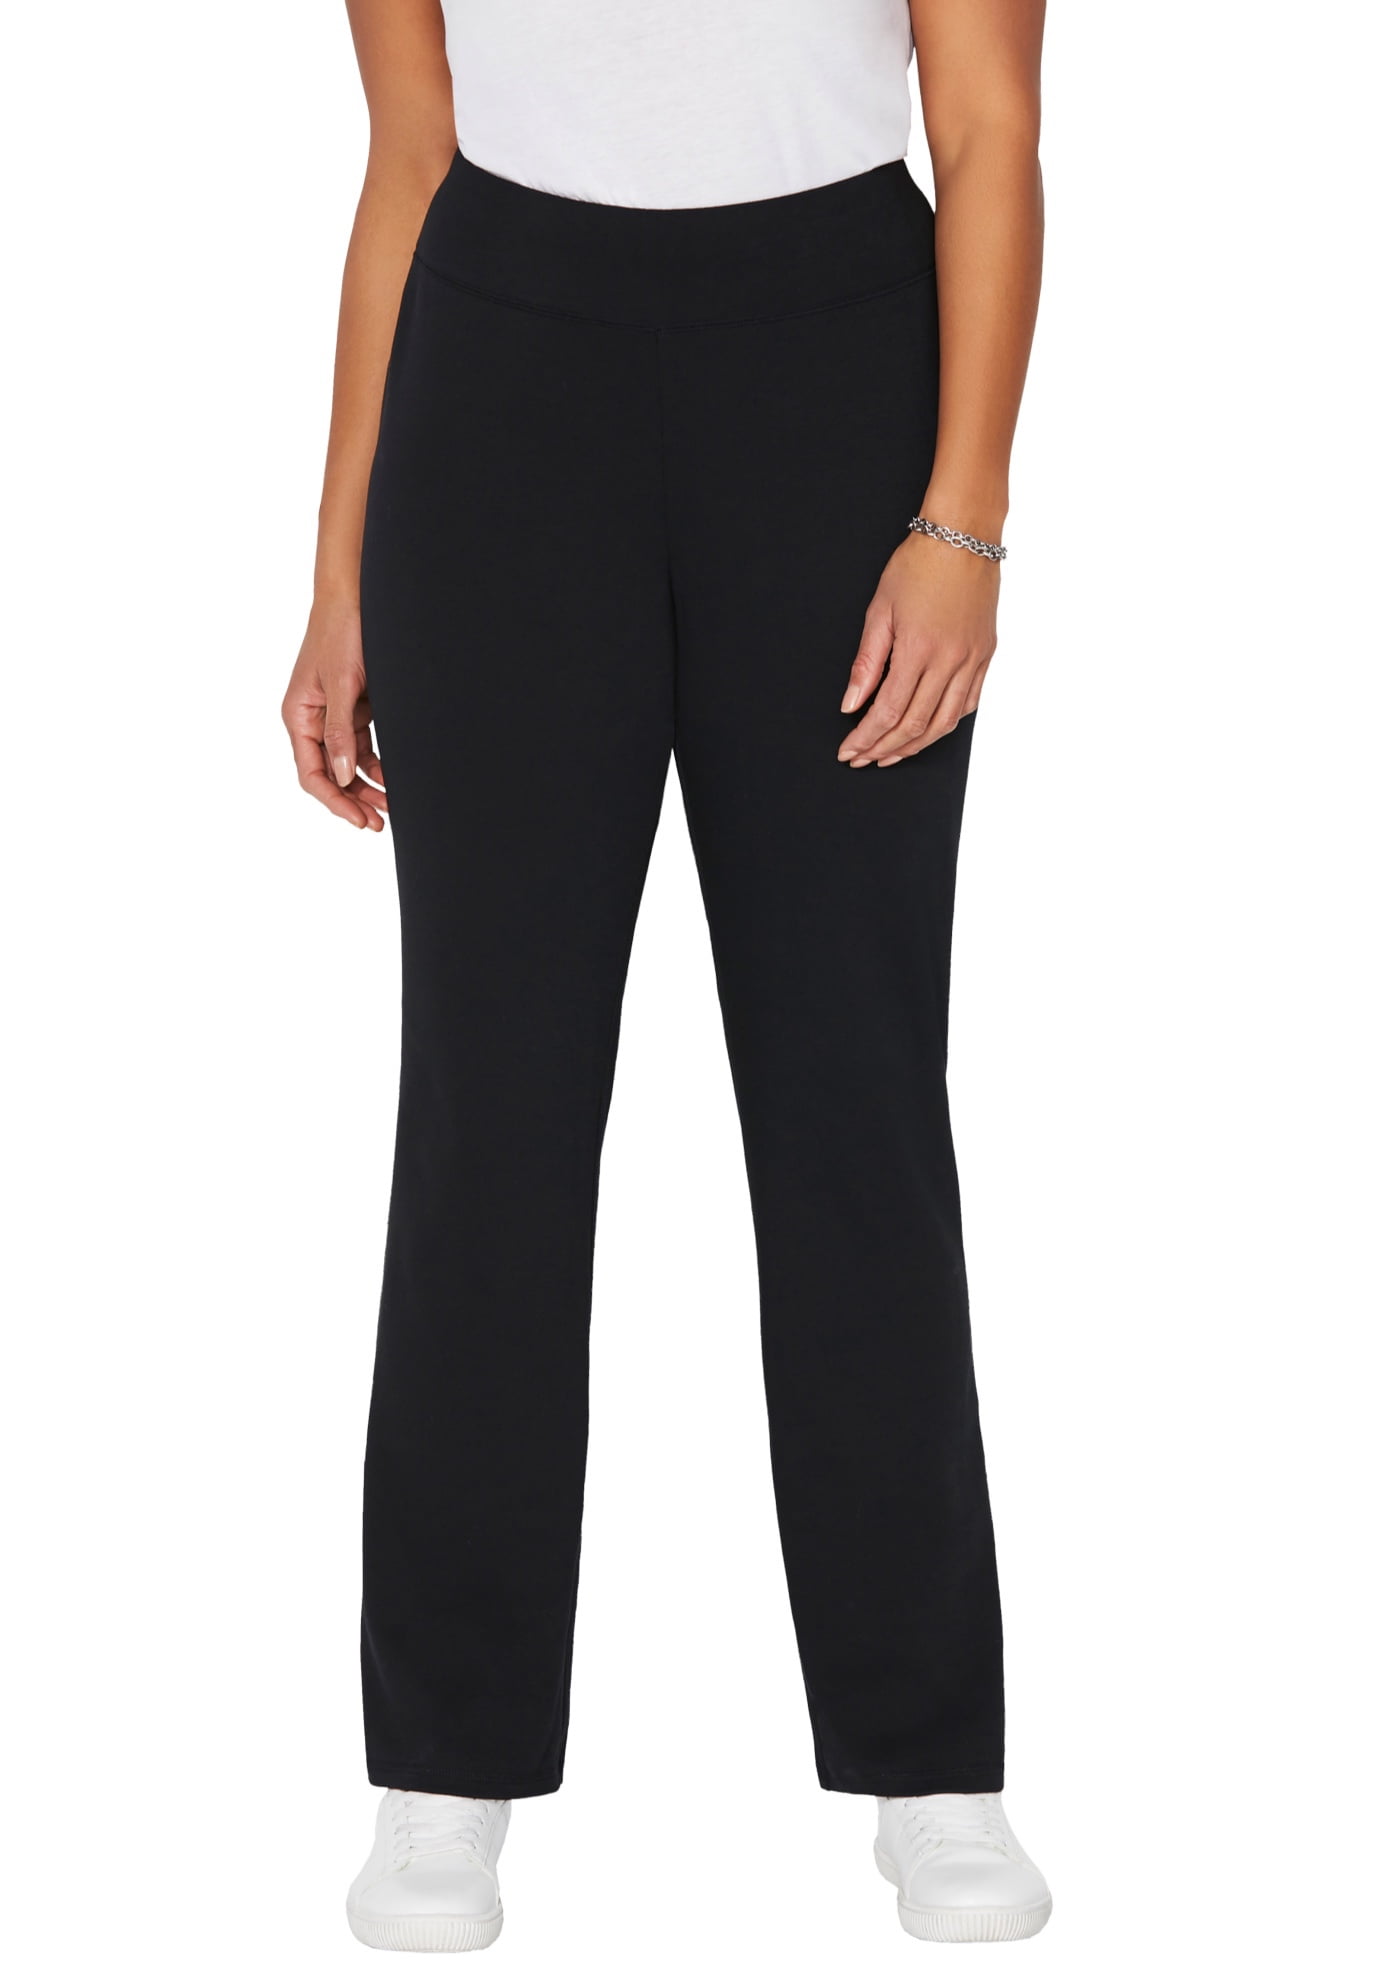 Catherines Women's Plus Size Yoga Pant - Walmart.com